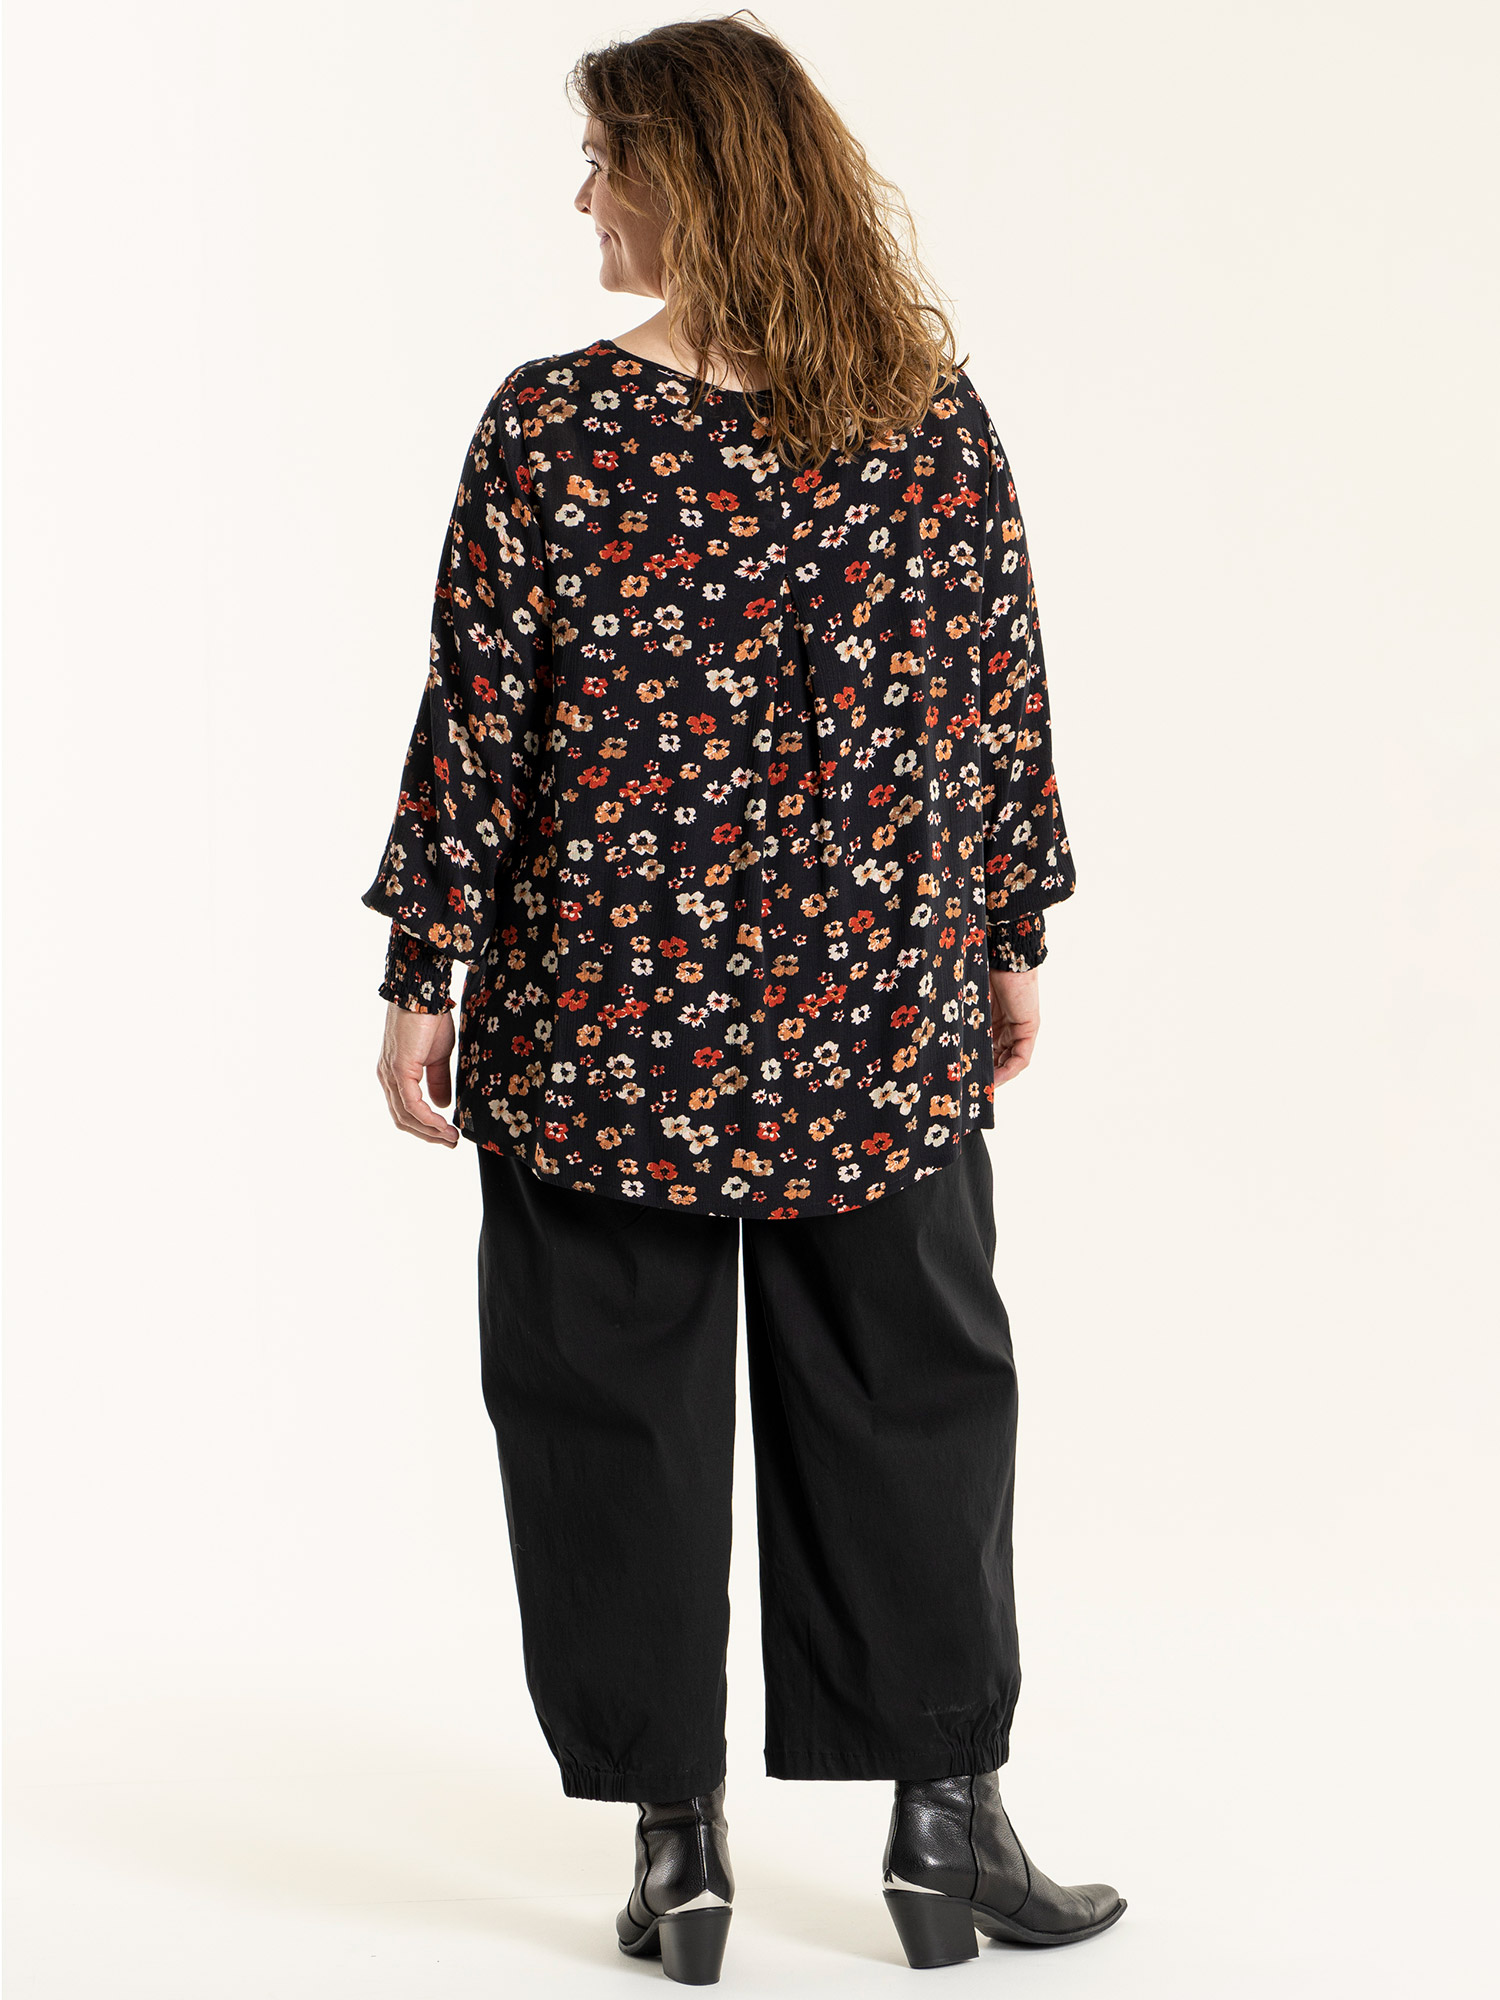 NATACHA - Svart bluse i crepet viskose med blomster print fra Gozzip